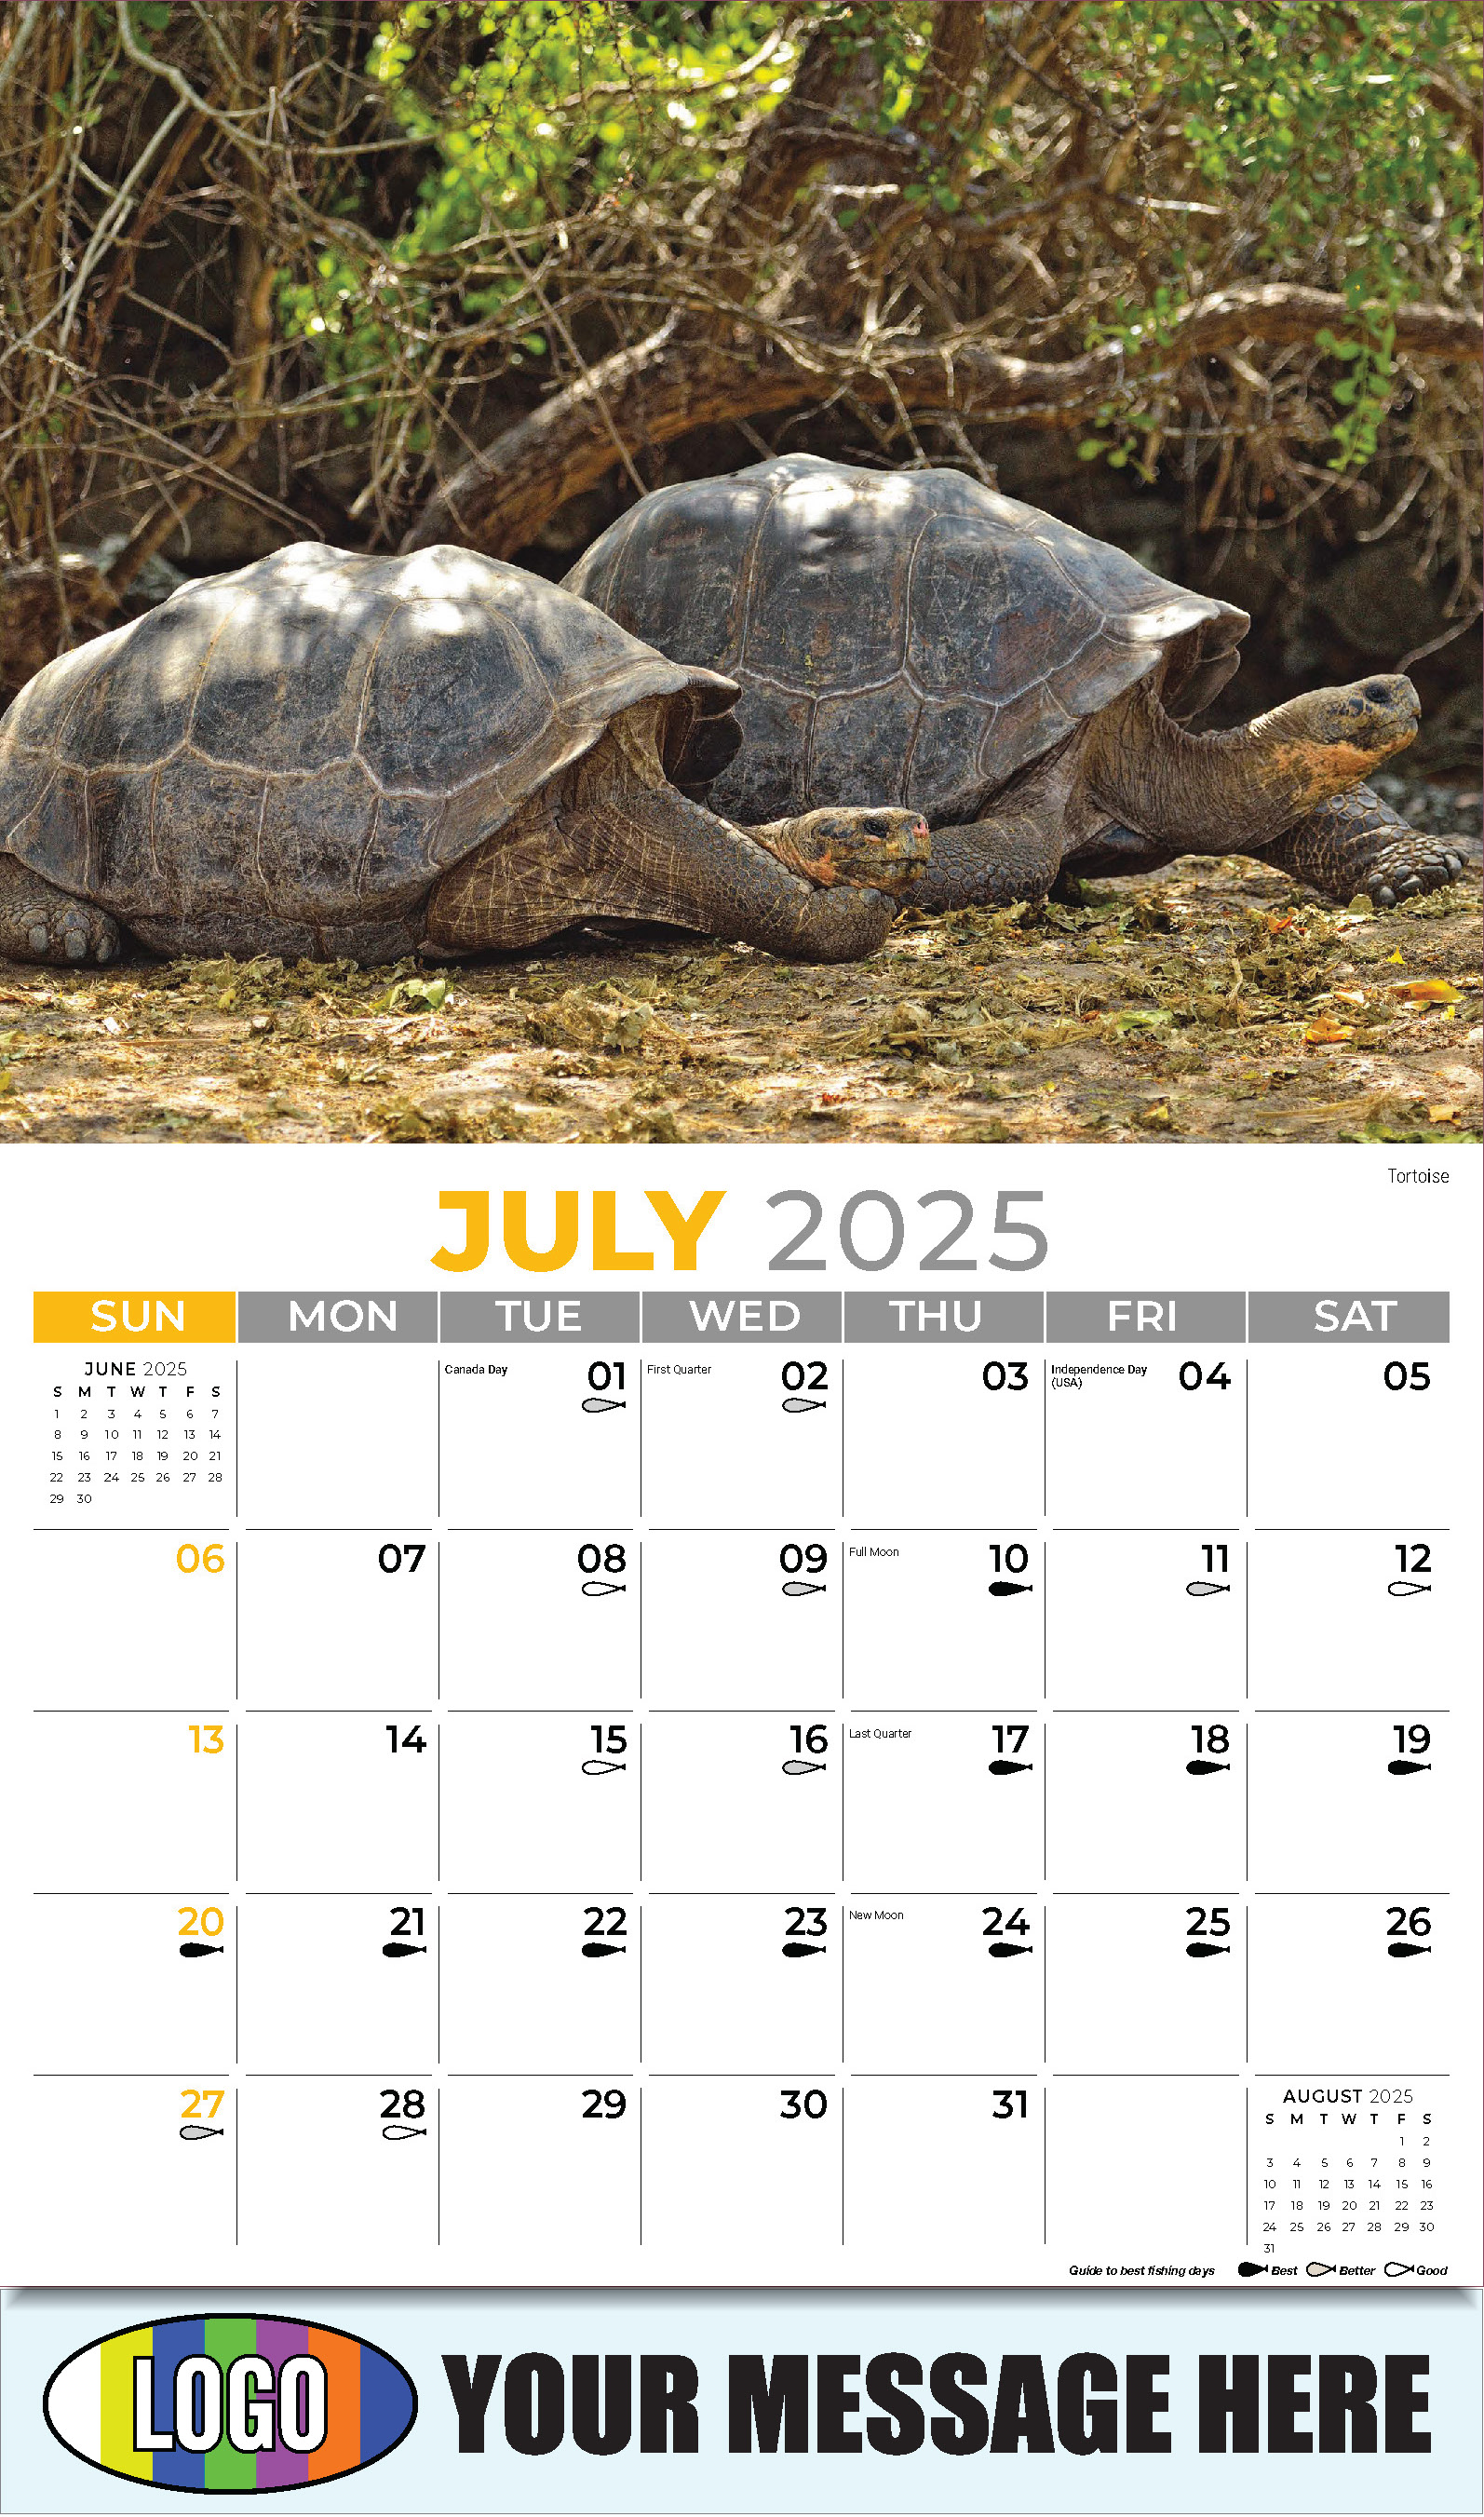 North American Wildlife 2025 Business Promo Wall Calendar - July